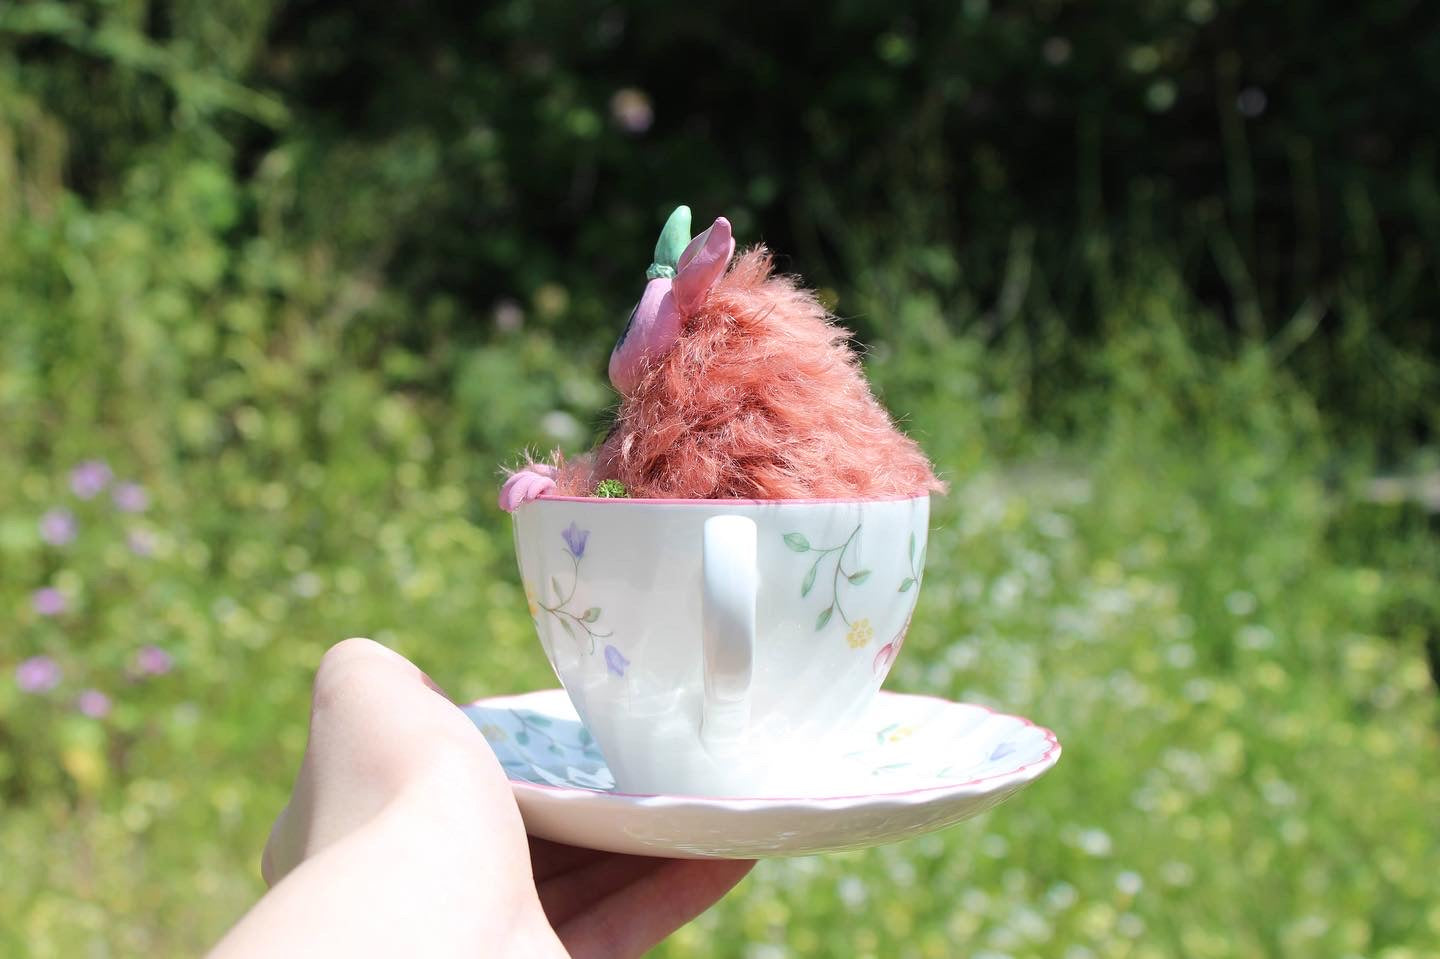 Petunia the teacup critter